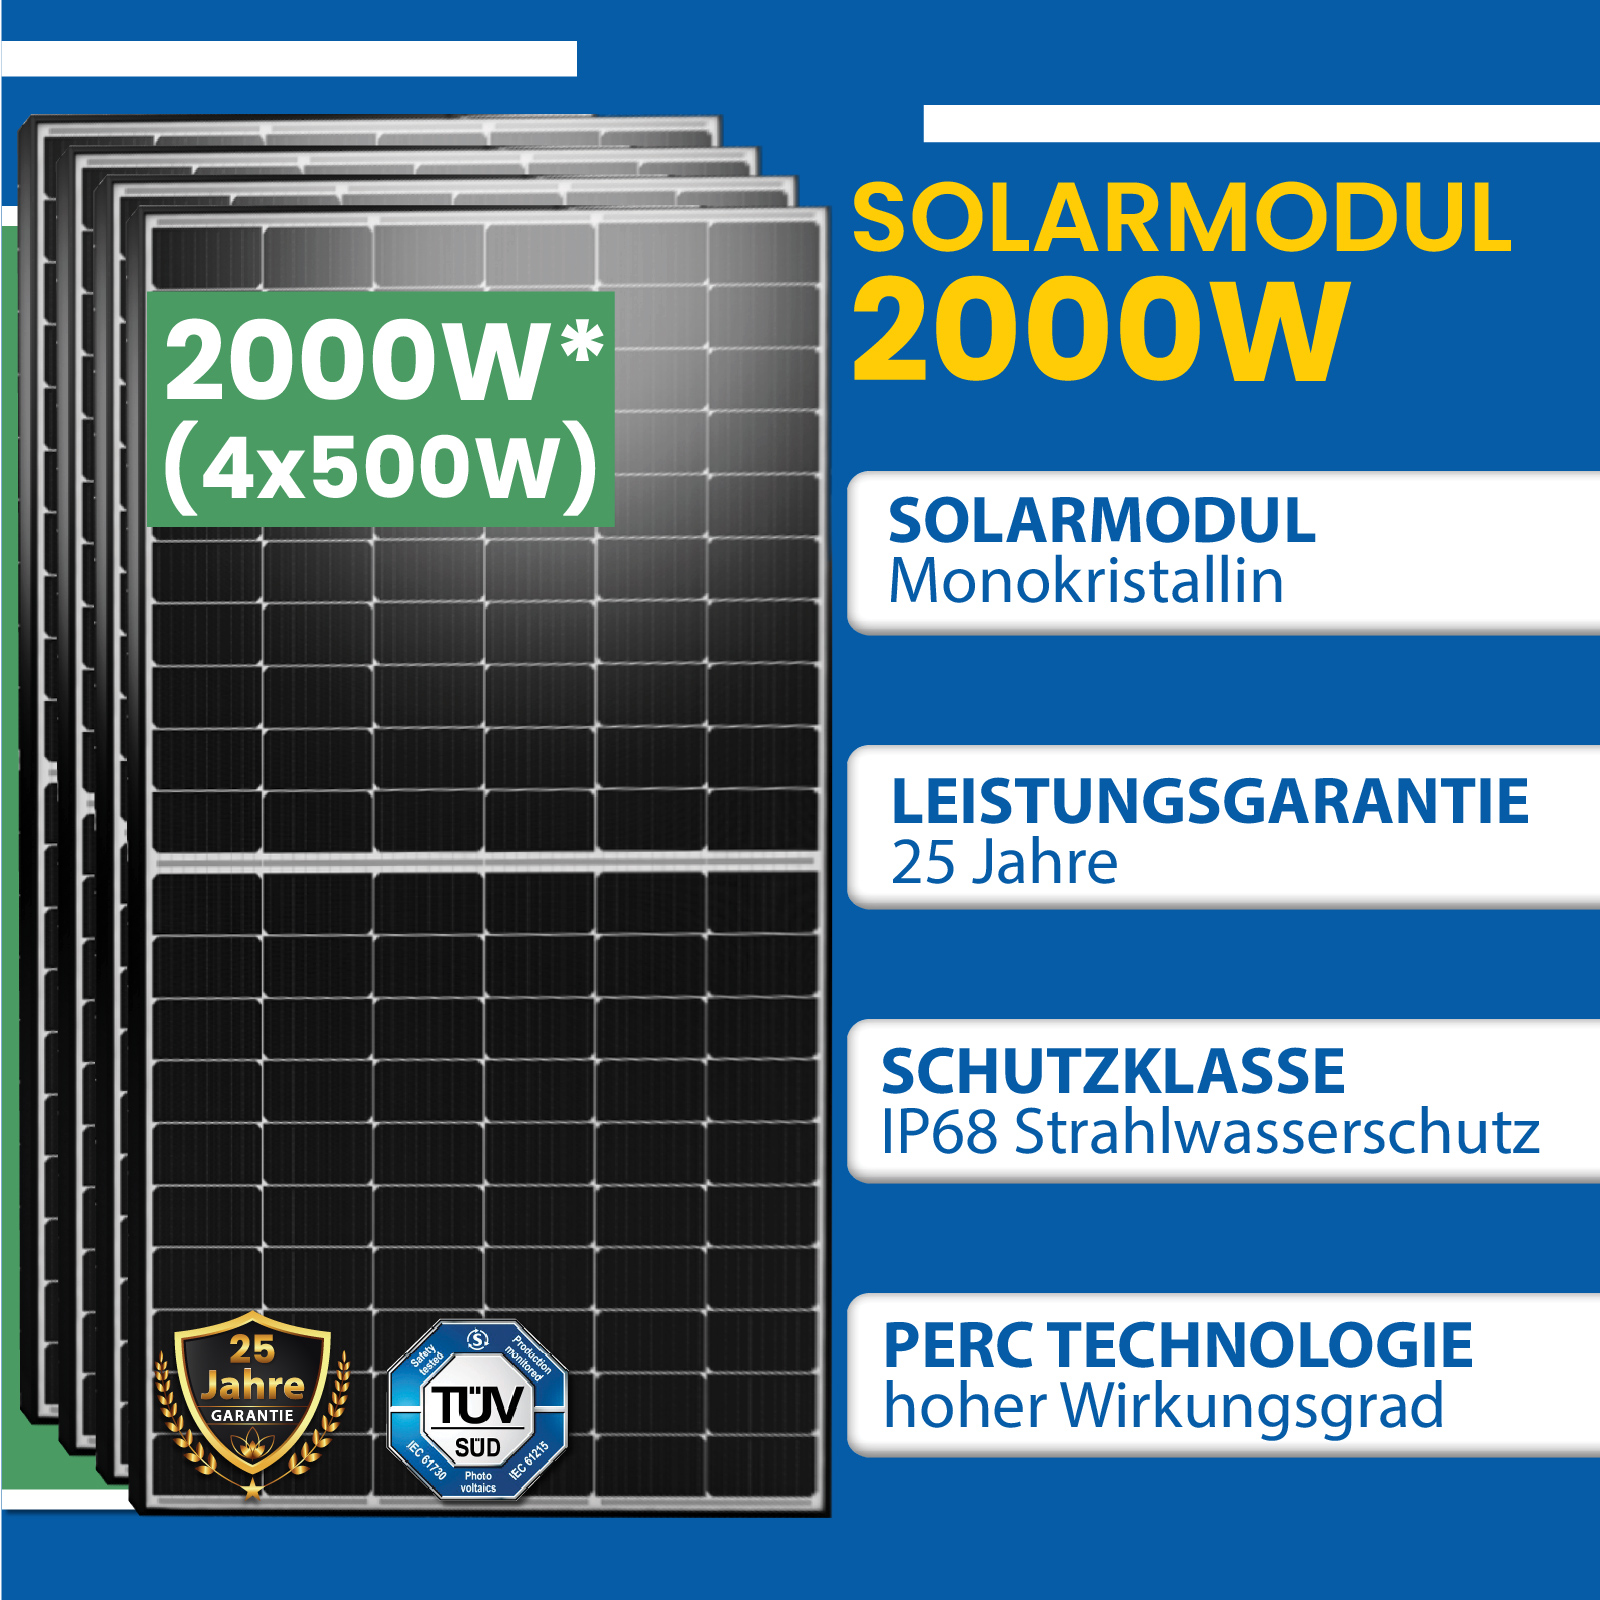 1600W Balkonkraftwerk Komplettset inkl. 400W Solarmodule, Hoymiles HMS-1600W-4T  Wechselrichter, DTU-Wlite-S, Wielandstecker - Enprove Solar GmbH